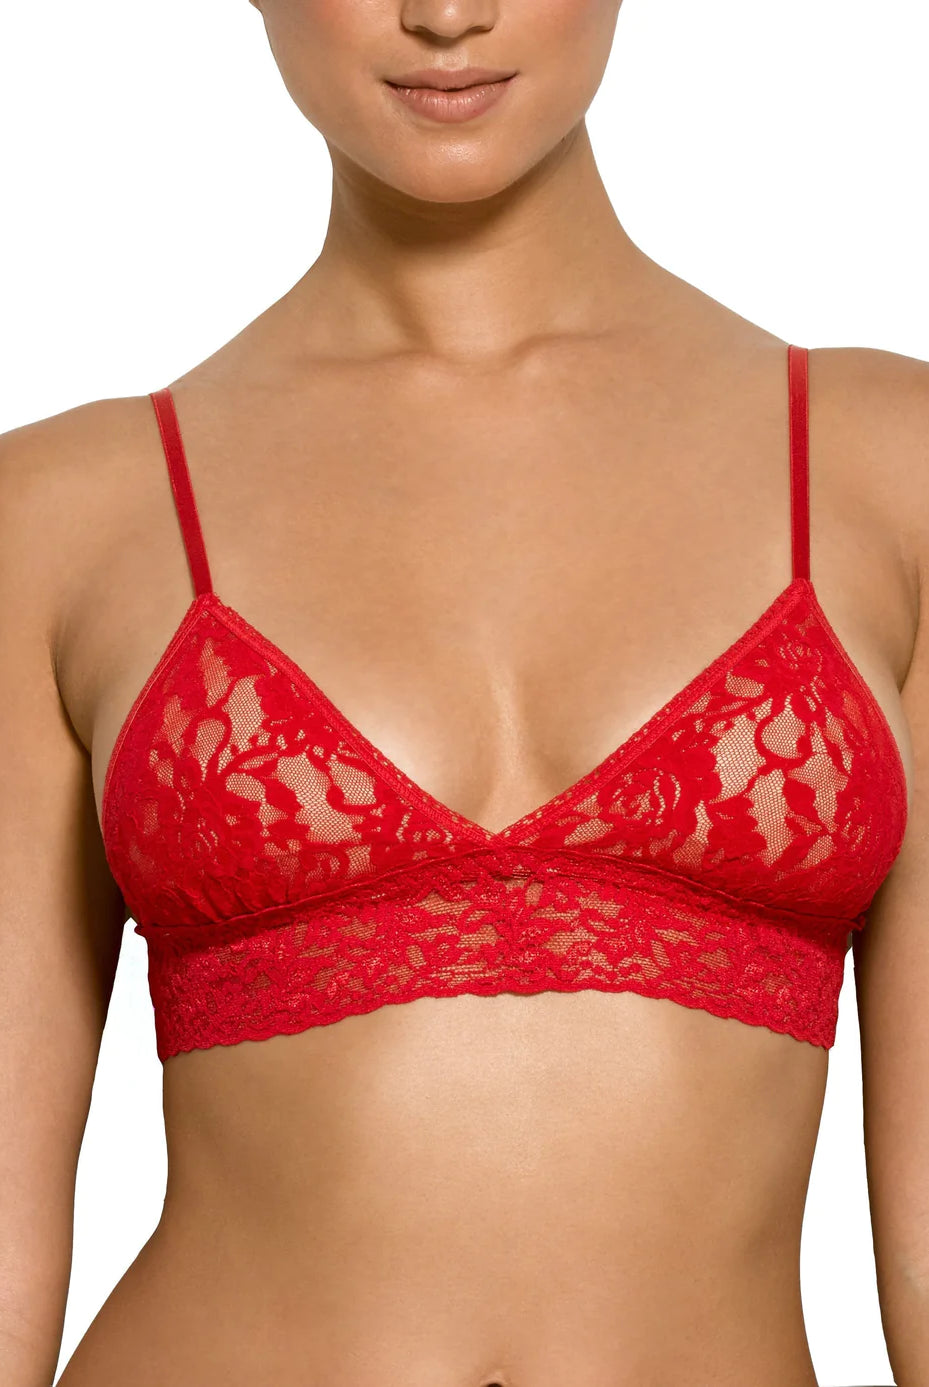 Signature Lace Padded Triangle Bralette - Red - Flirt! Luxe Lingerie & Sleepwear